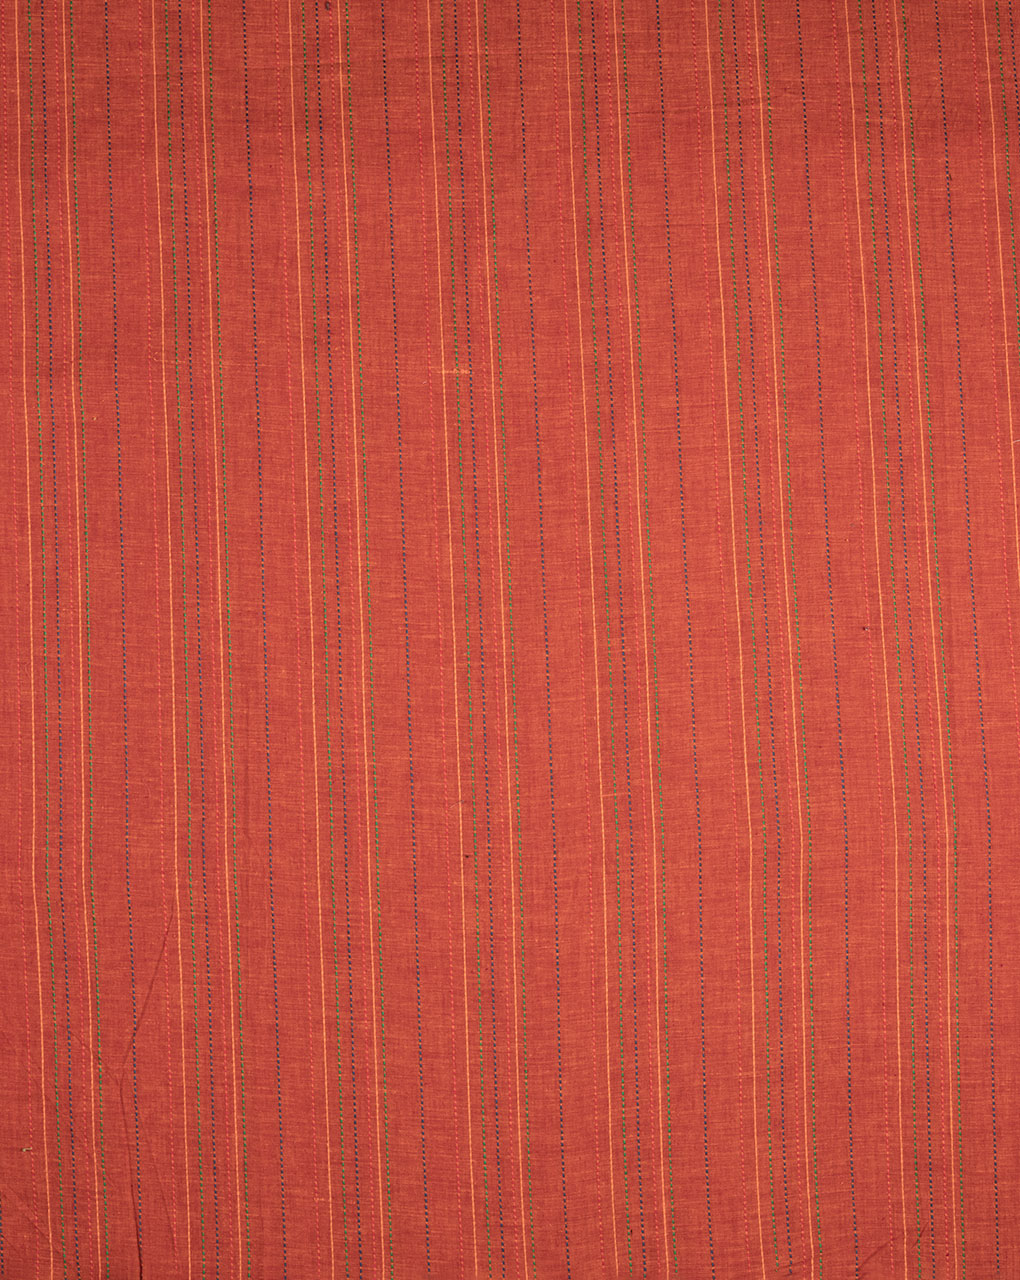 Kantha Loom Textured Cotton Fabric - Fabriclore.com